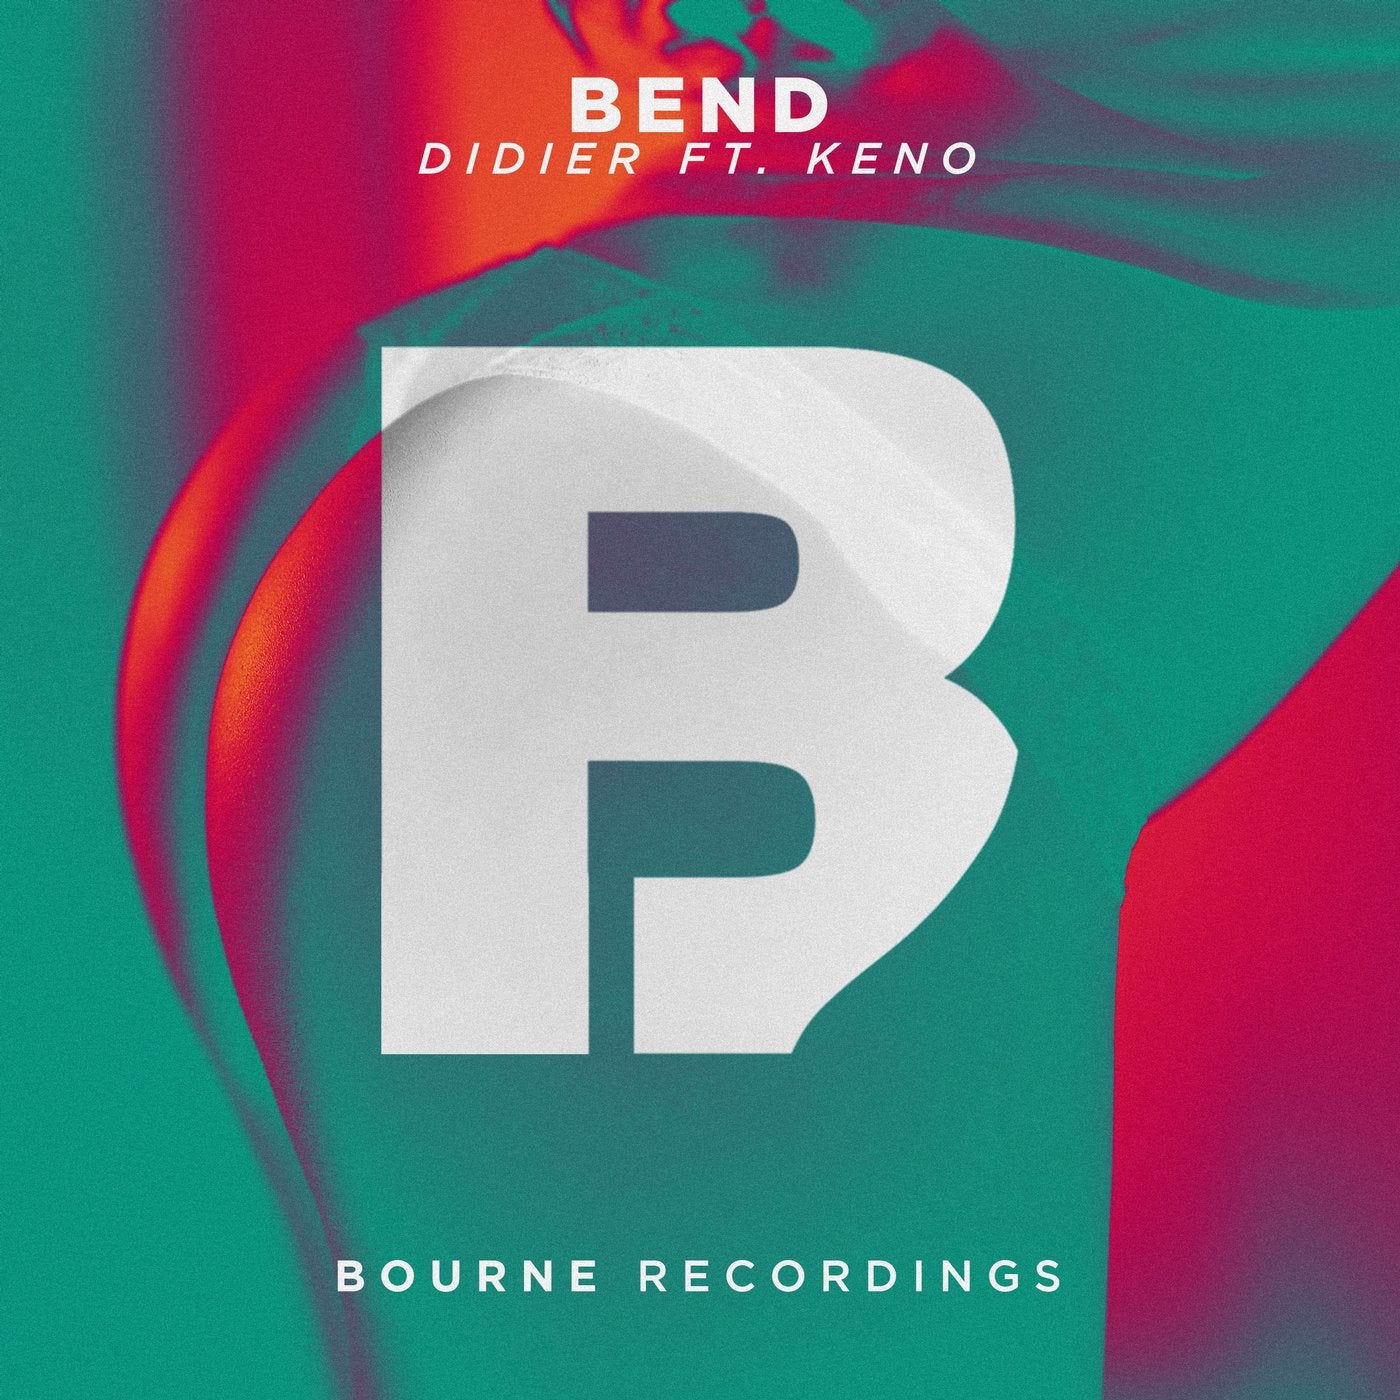 Bend feat. Keno